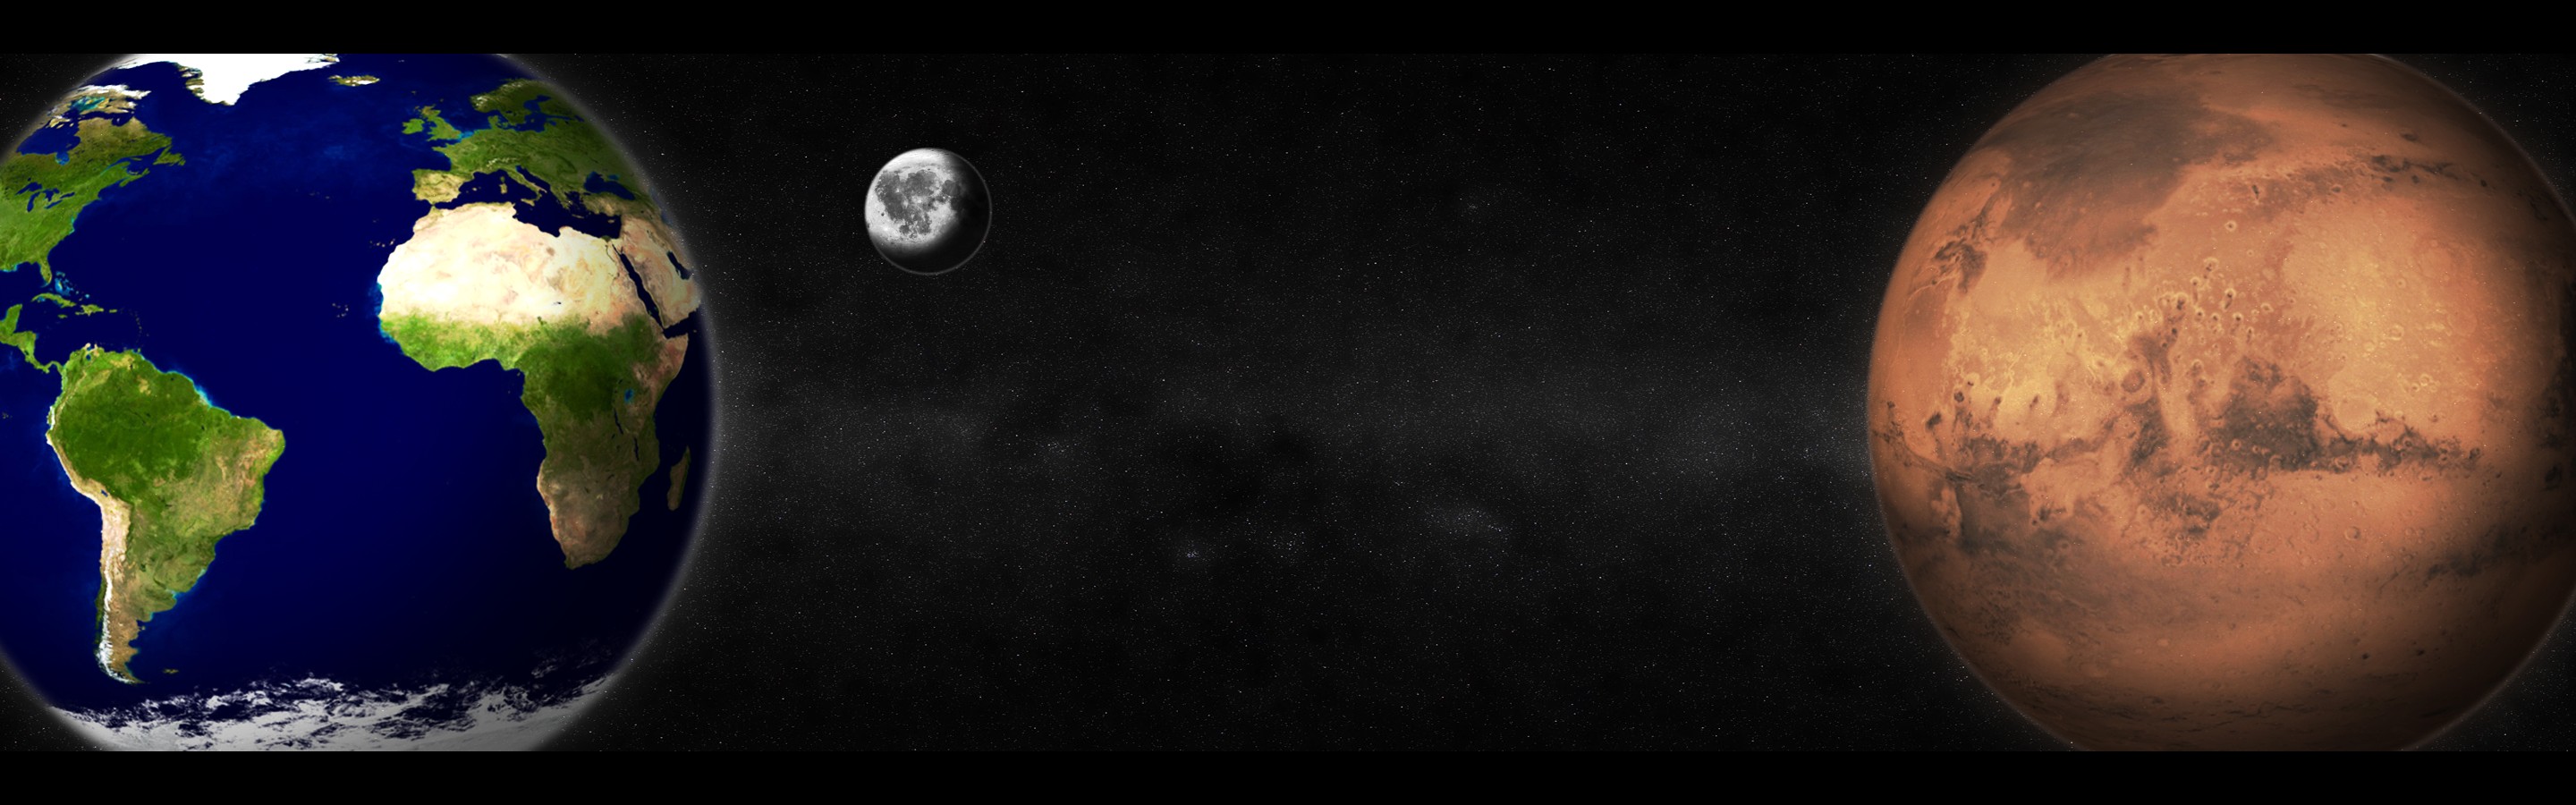 Space Sky Wallpaper Black Plas Moon